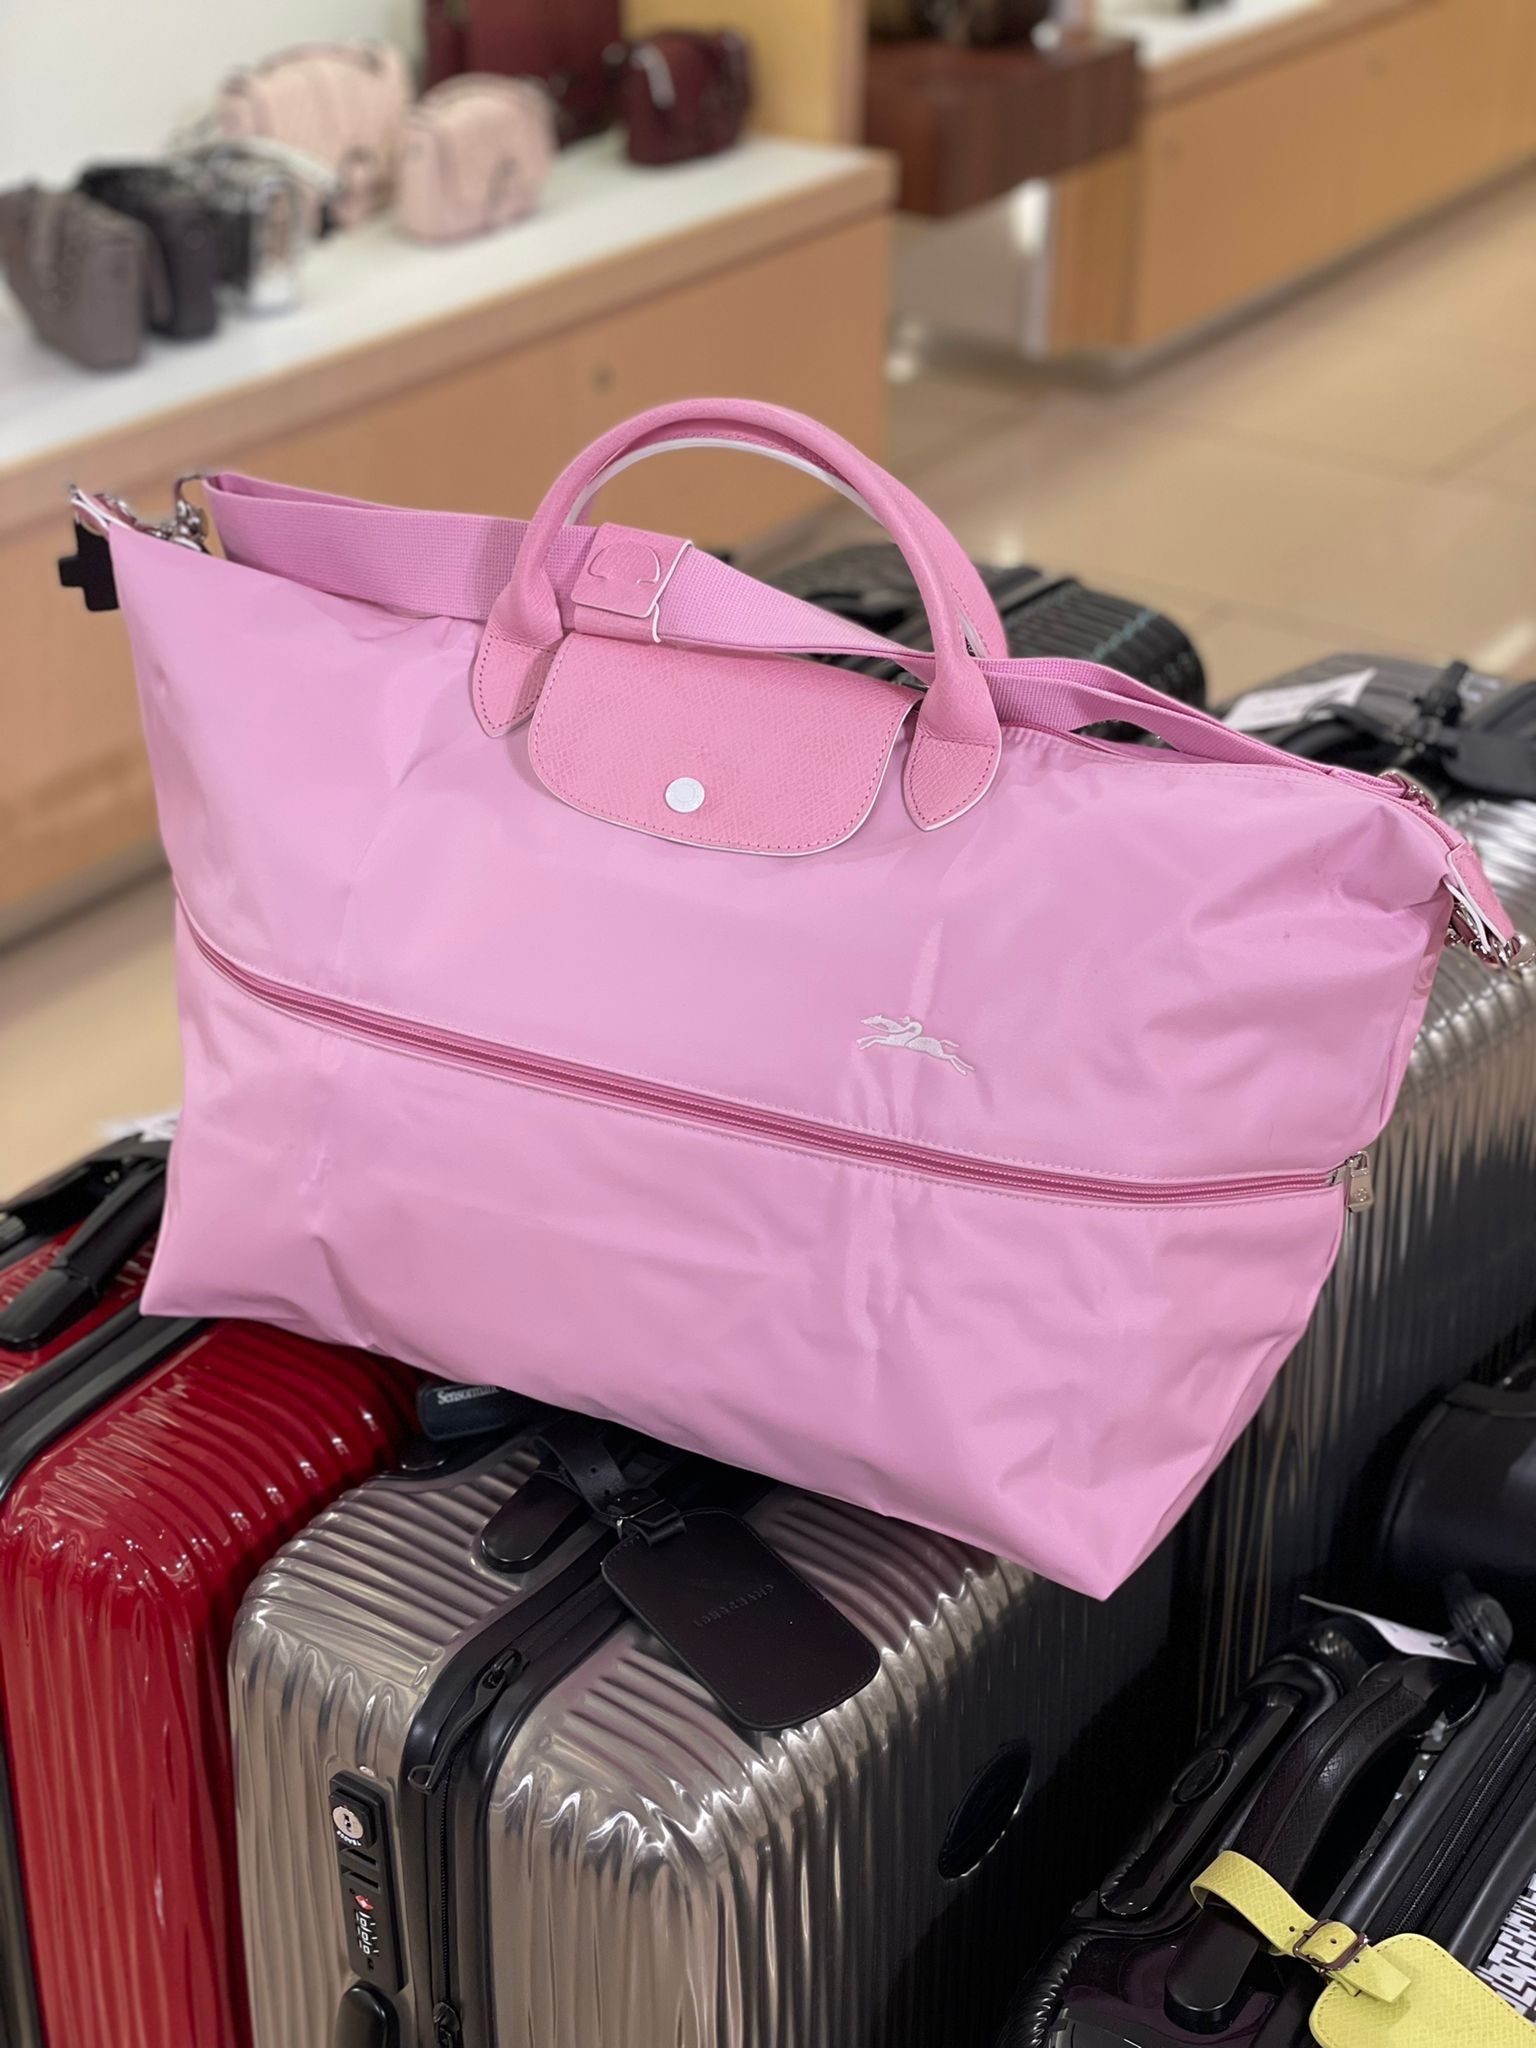 Glad Reception Anyways AzuraMart - Longchamp Li Pliage Club - Pink - Travel Bag Expendable  L1911619P36